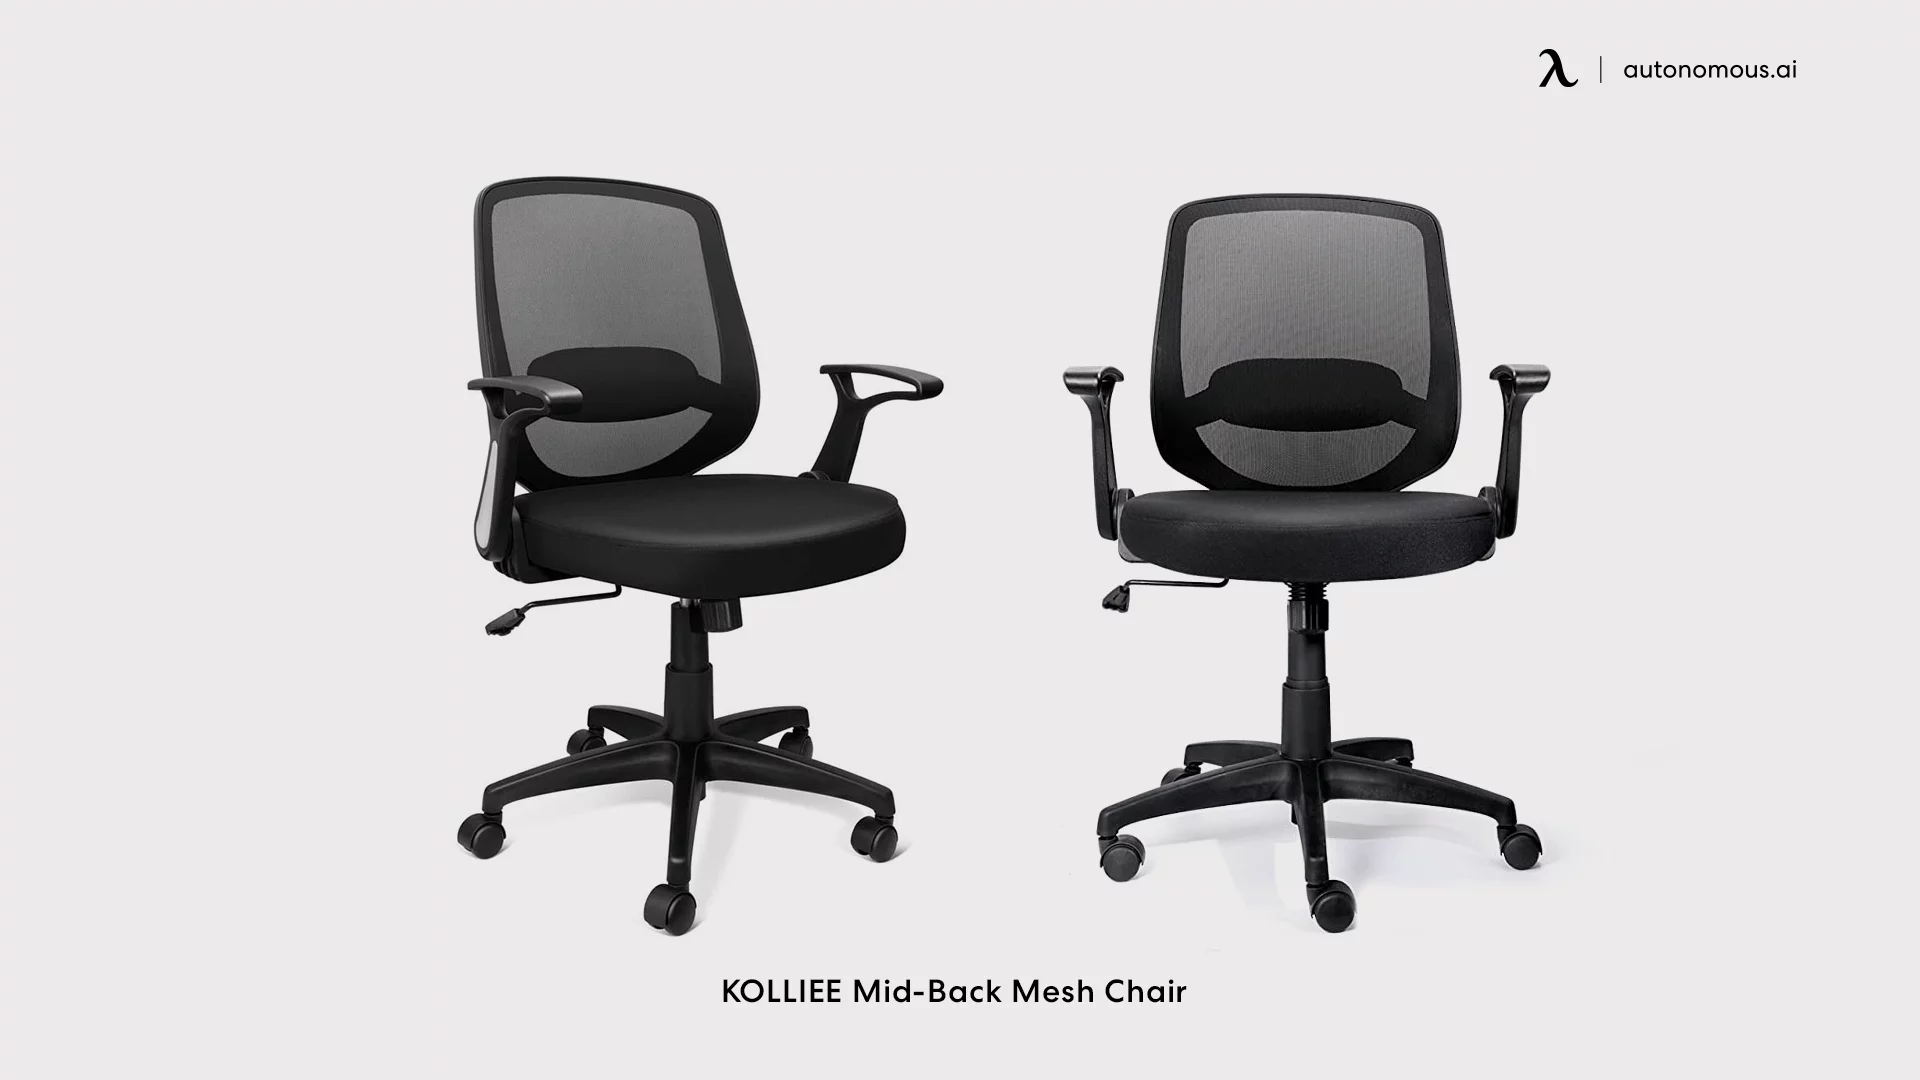 KOLLIEE Mid-Back Mesh Adjustable Height Chair